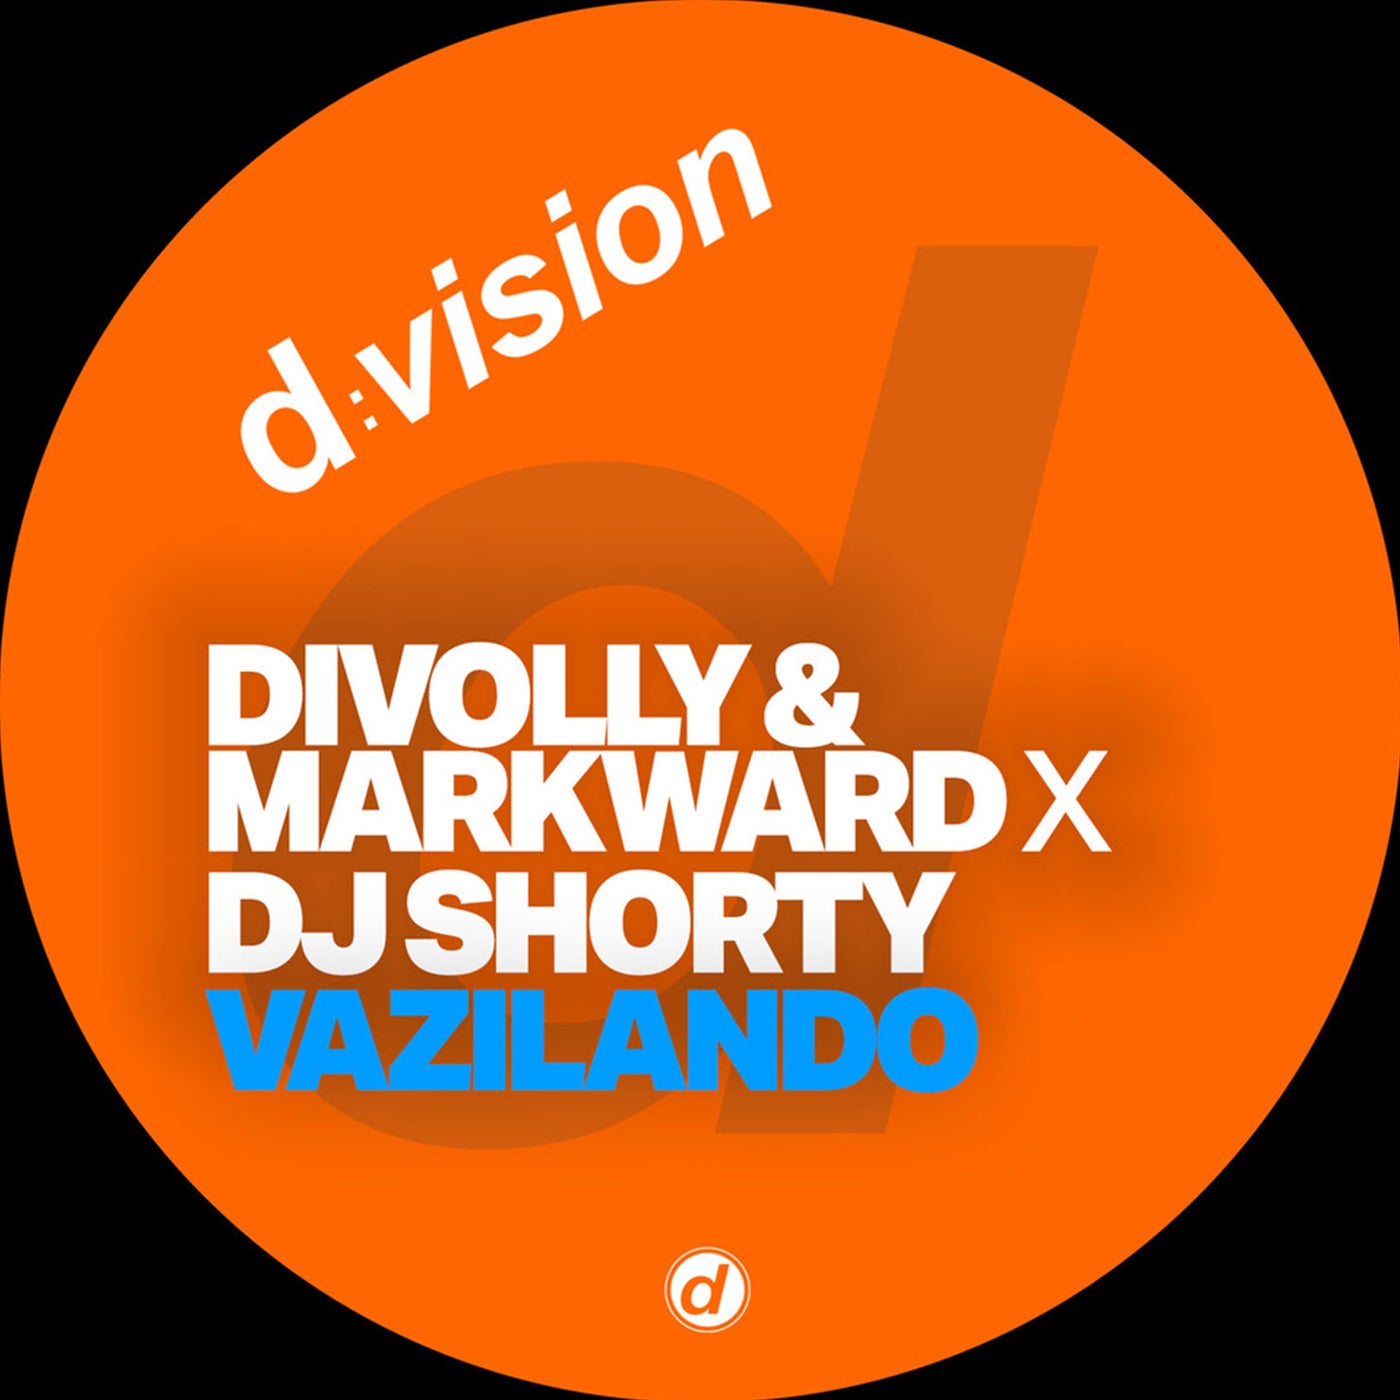 image cover: DJ Shorty, Divolly & Markward - Vazilando on d:vision